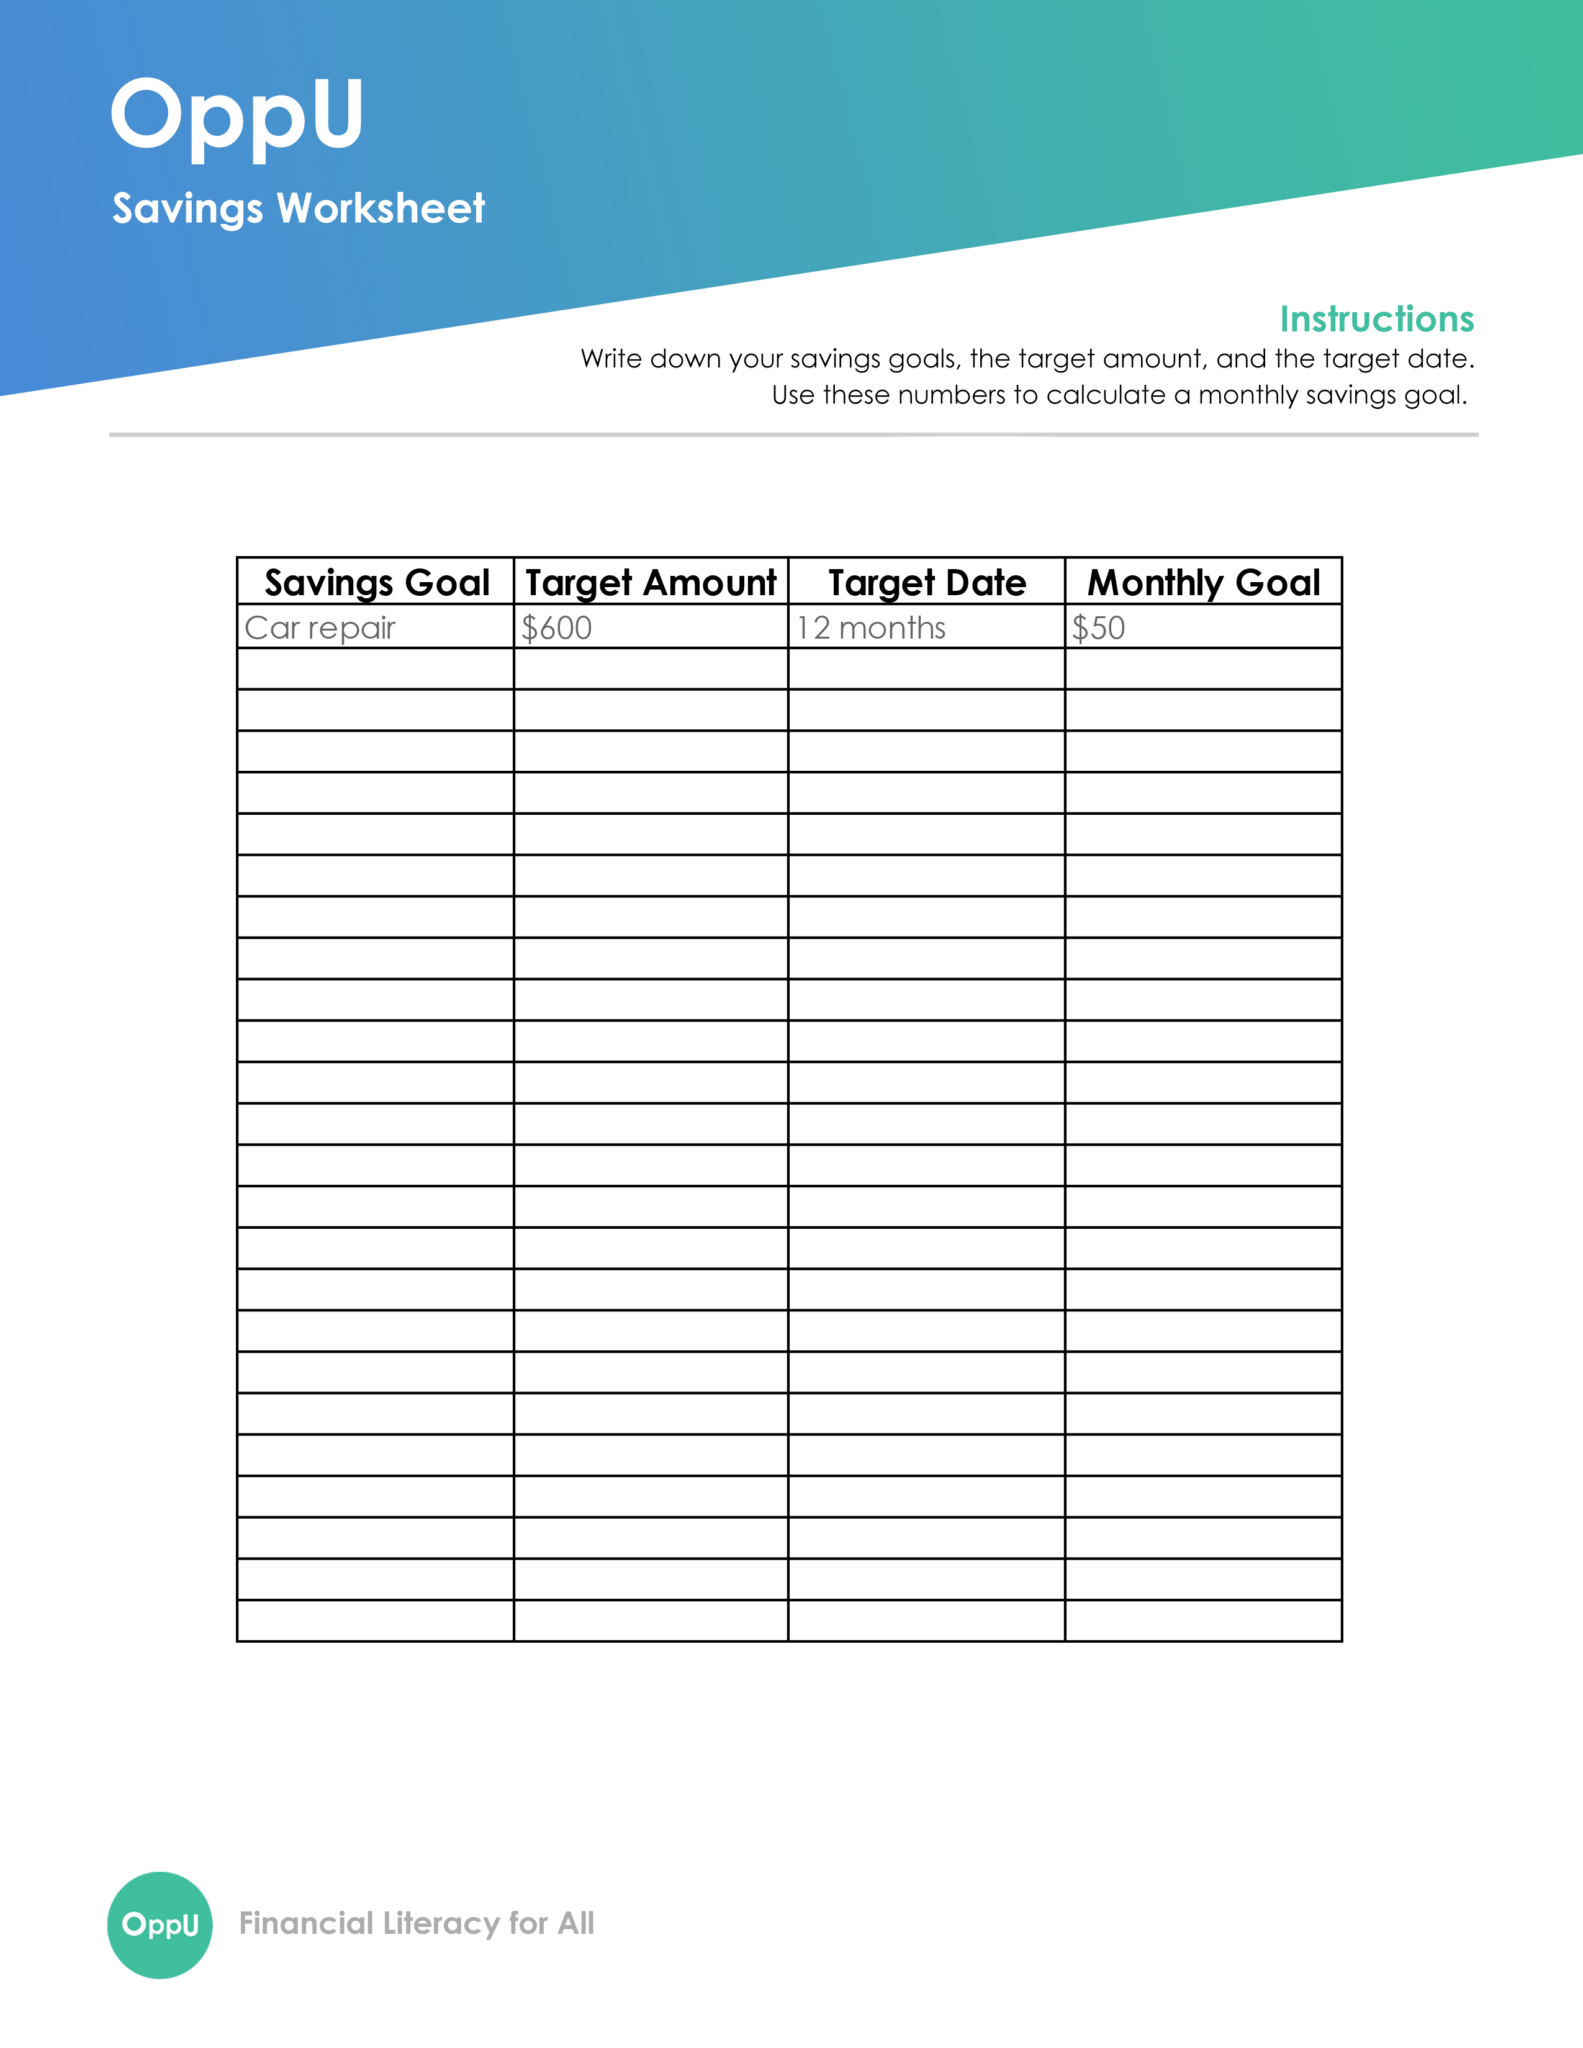 Free Savings Worksheet to Rock Your Money Goals in 4 Easy Steps - OppLoans